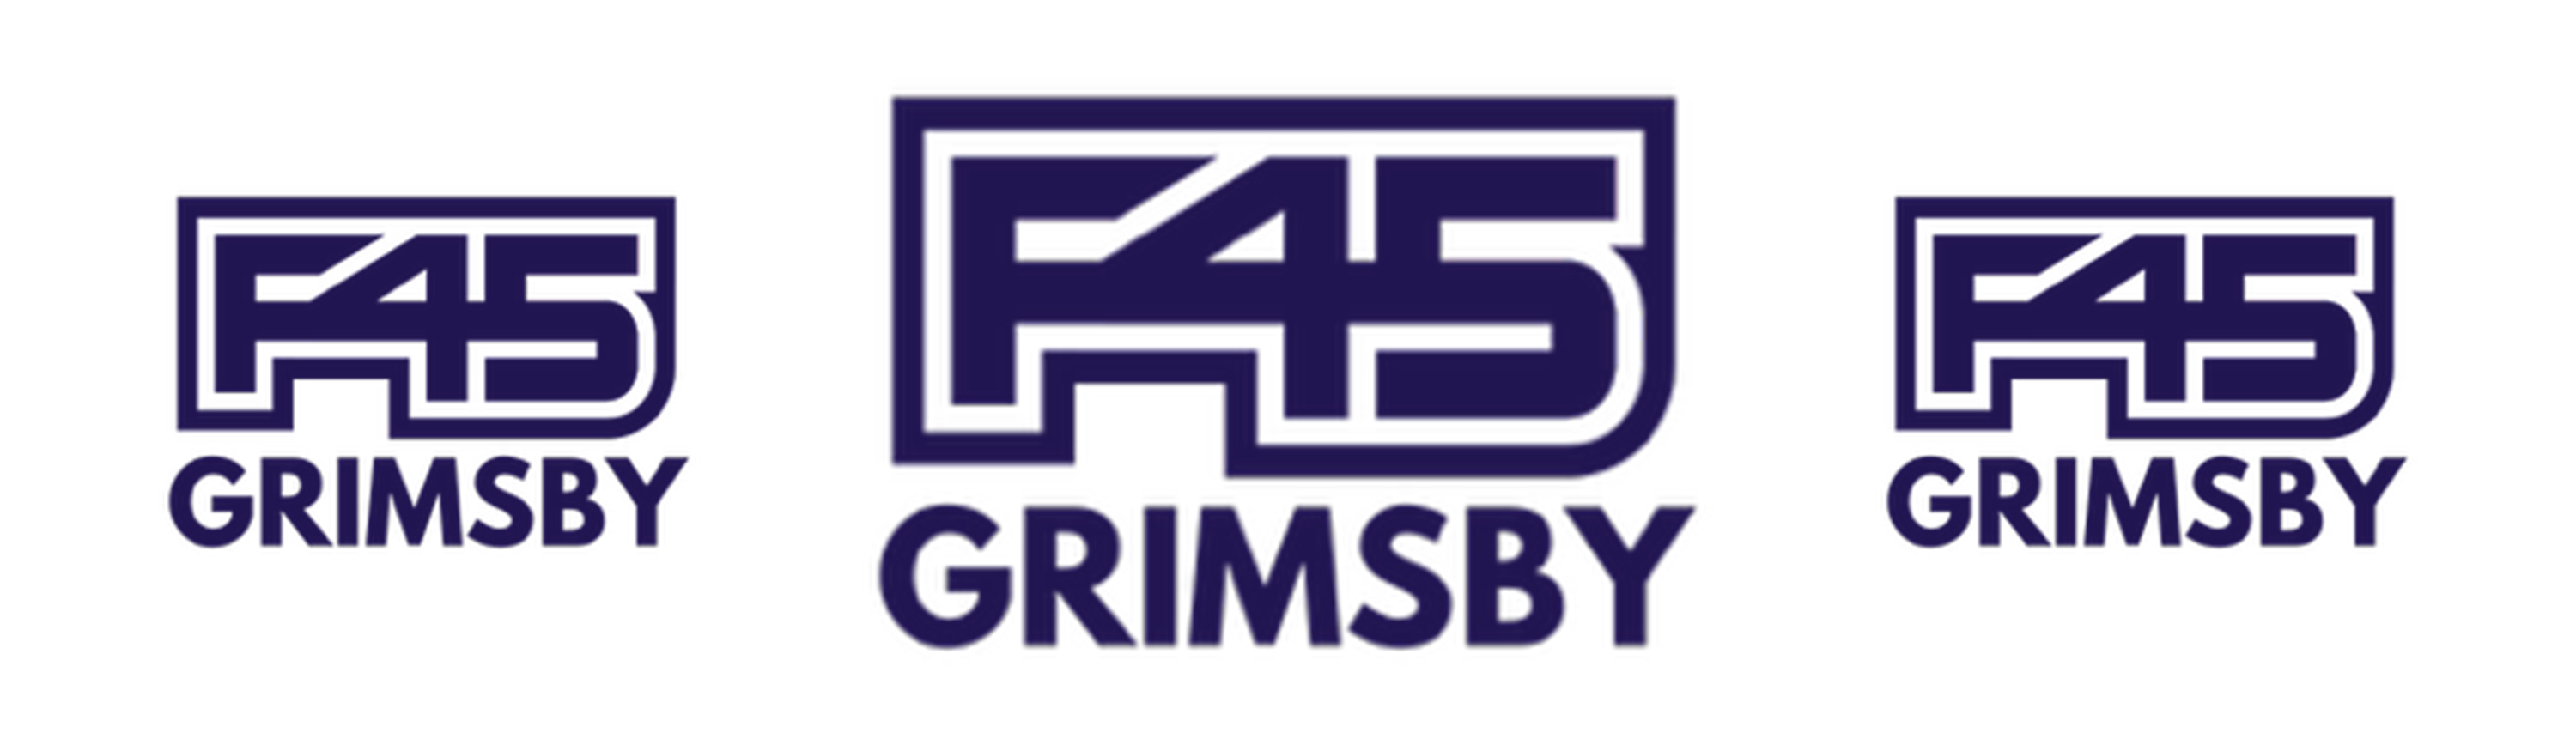 F45 GRIMSBY